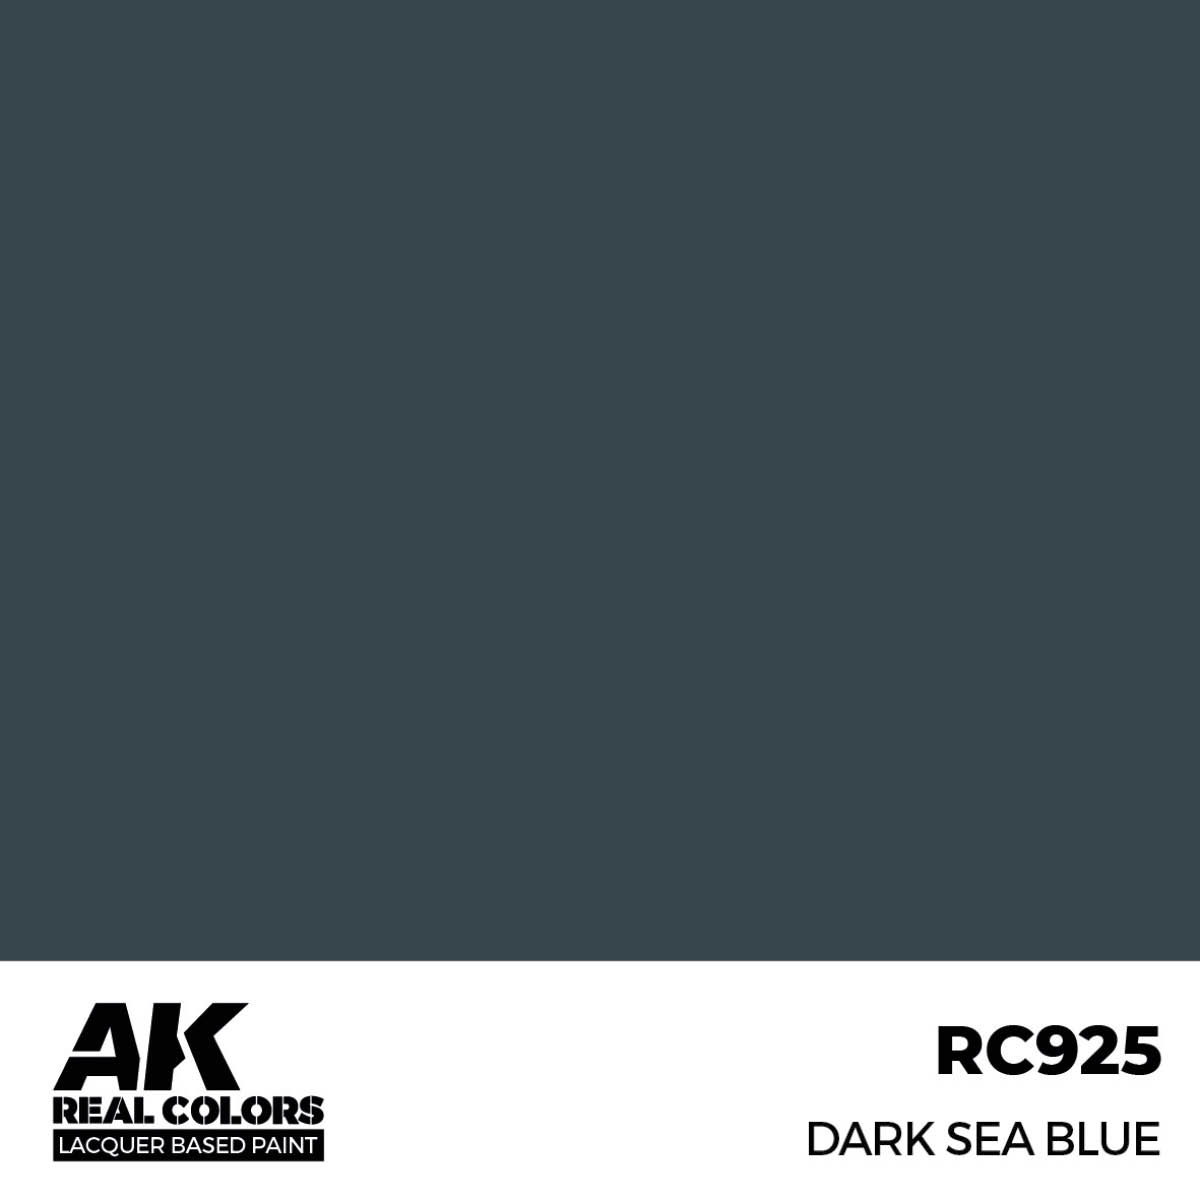 Dark Sea Blue